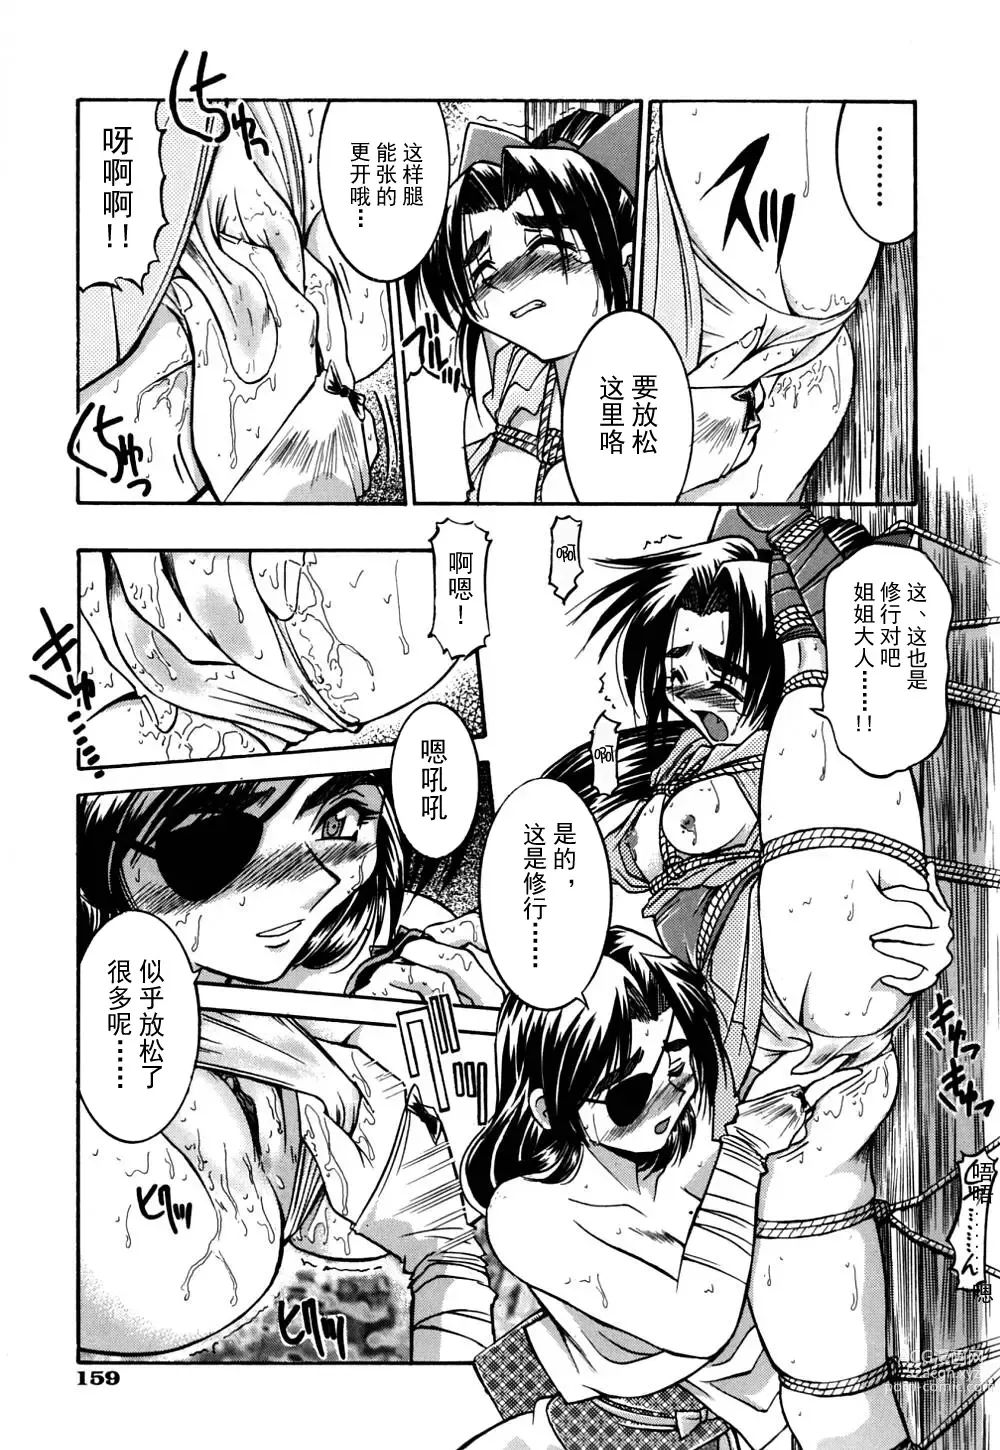 Page 166 of manga Ground Ero